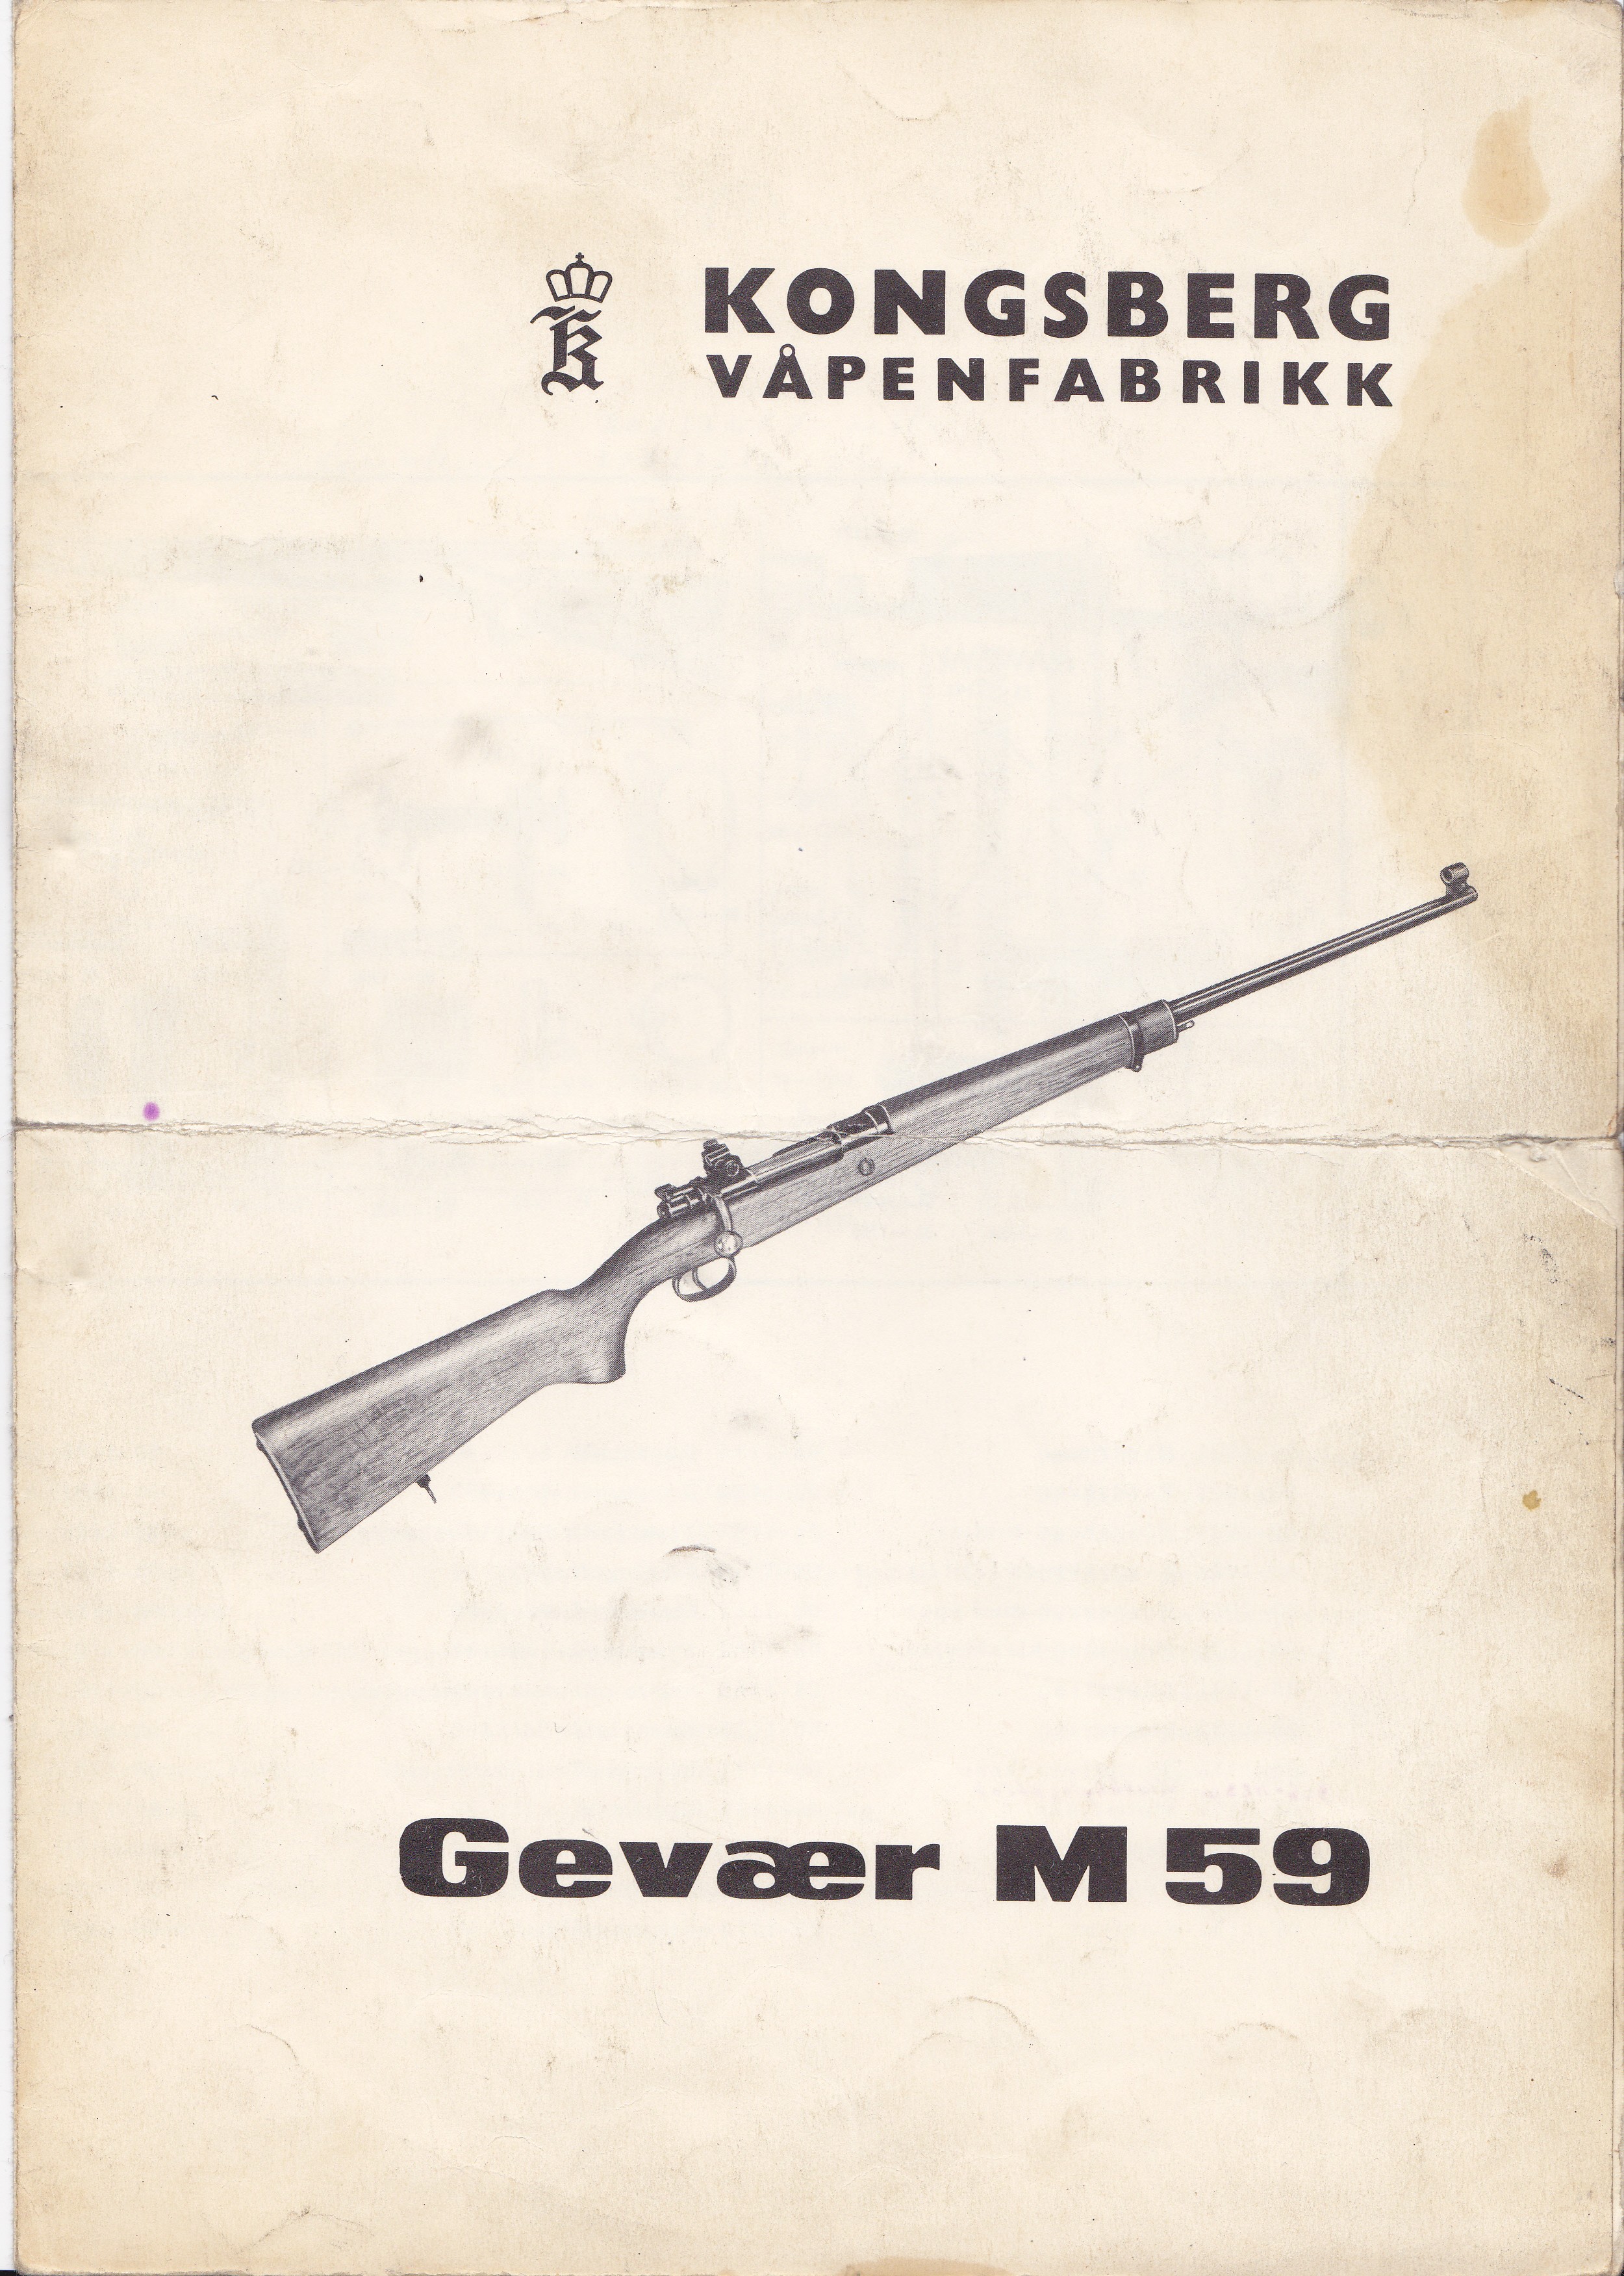 ./guns/rifle/bilder/Rifle-Kongsberg-Mauser-M59-brosjyre-1.jpg